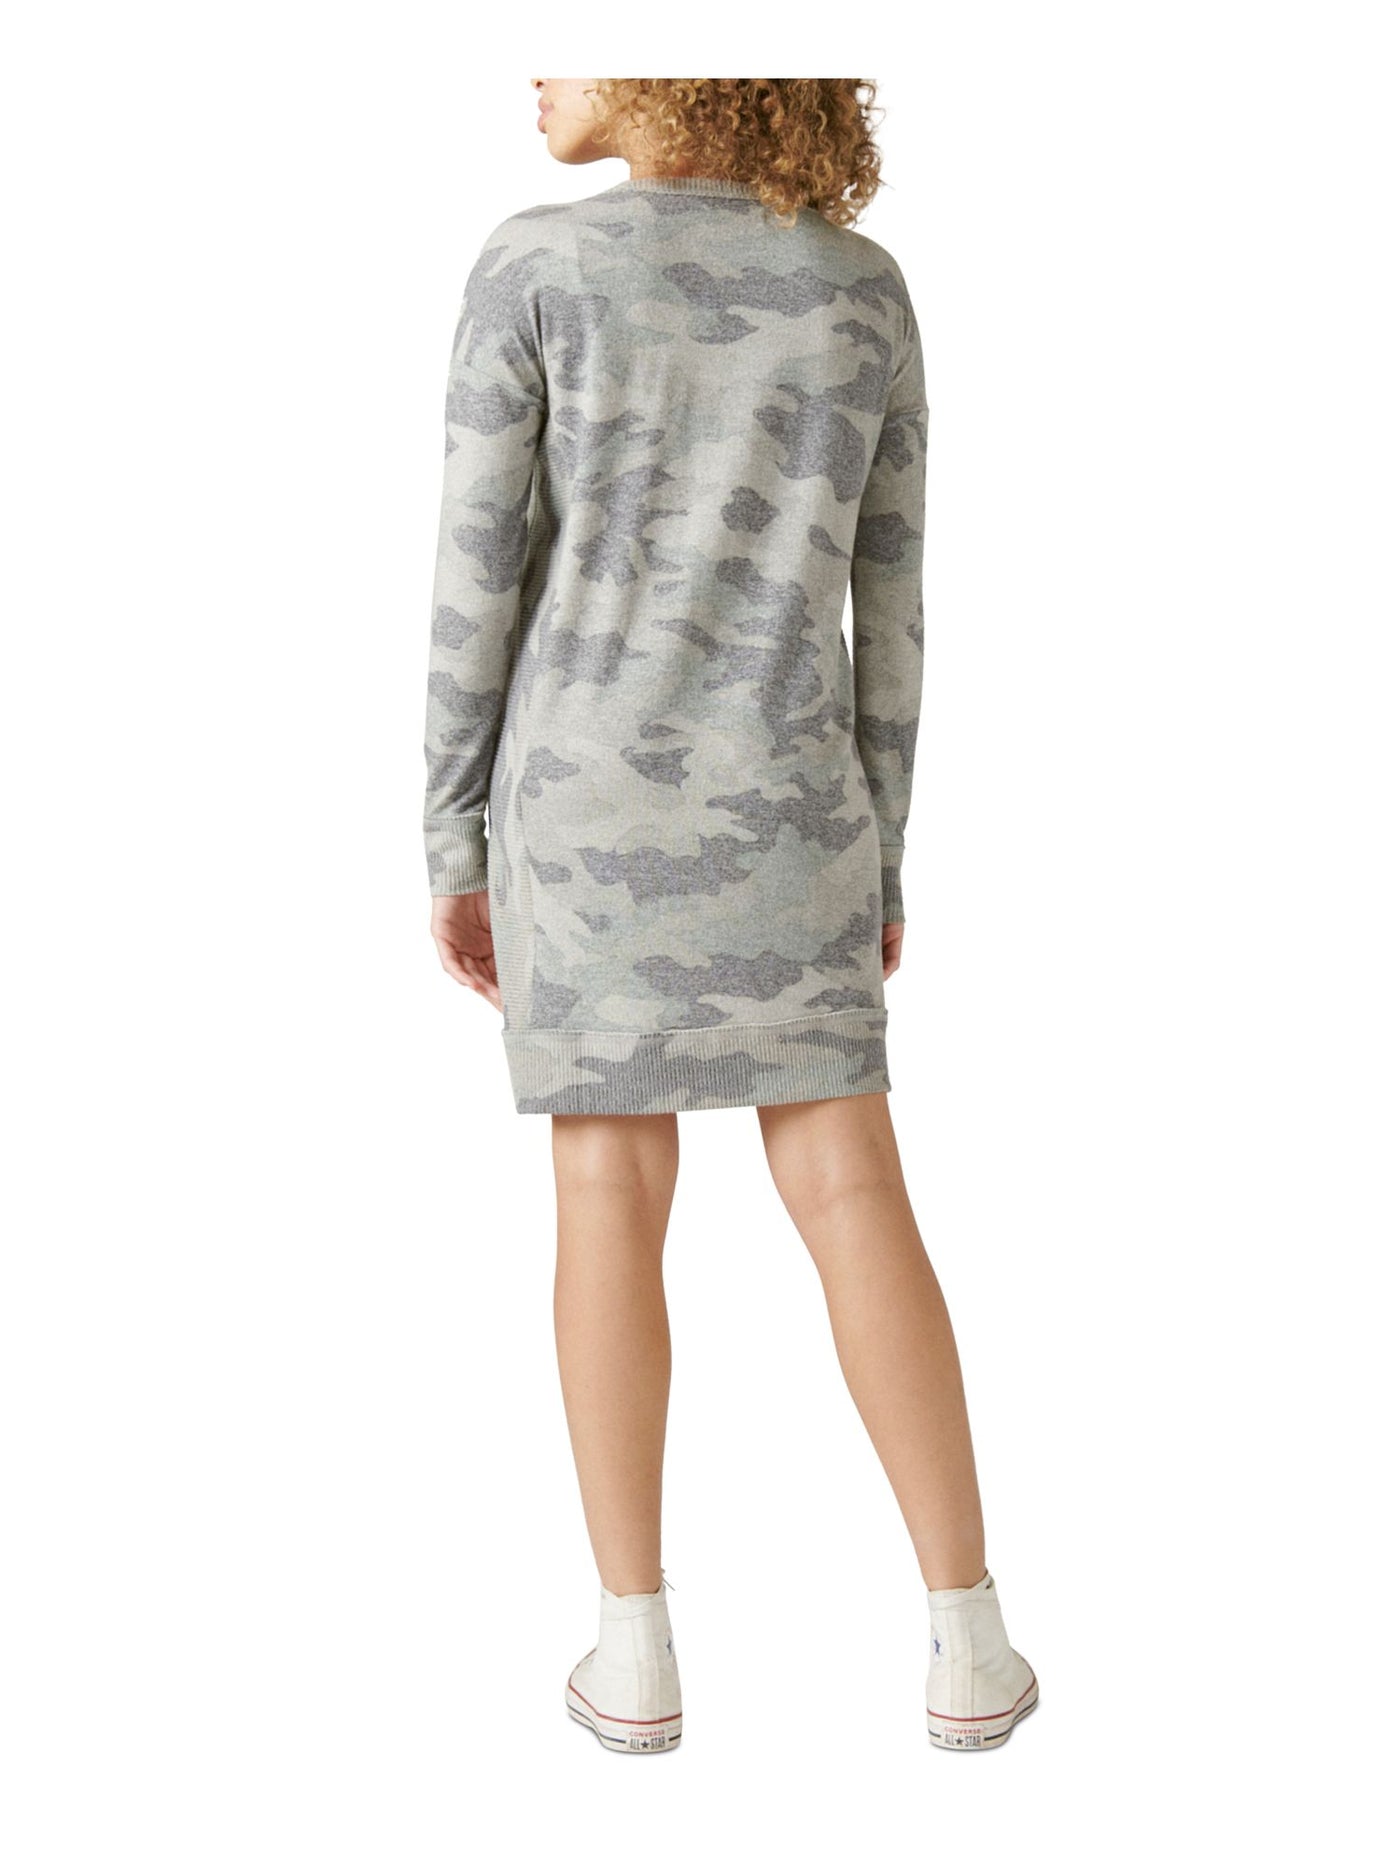 LUCKY BRAND Womens Gray Camouflage Long Sleeve Crew Neck Short Sweatshirt Dress XS